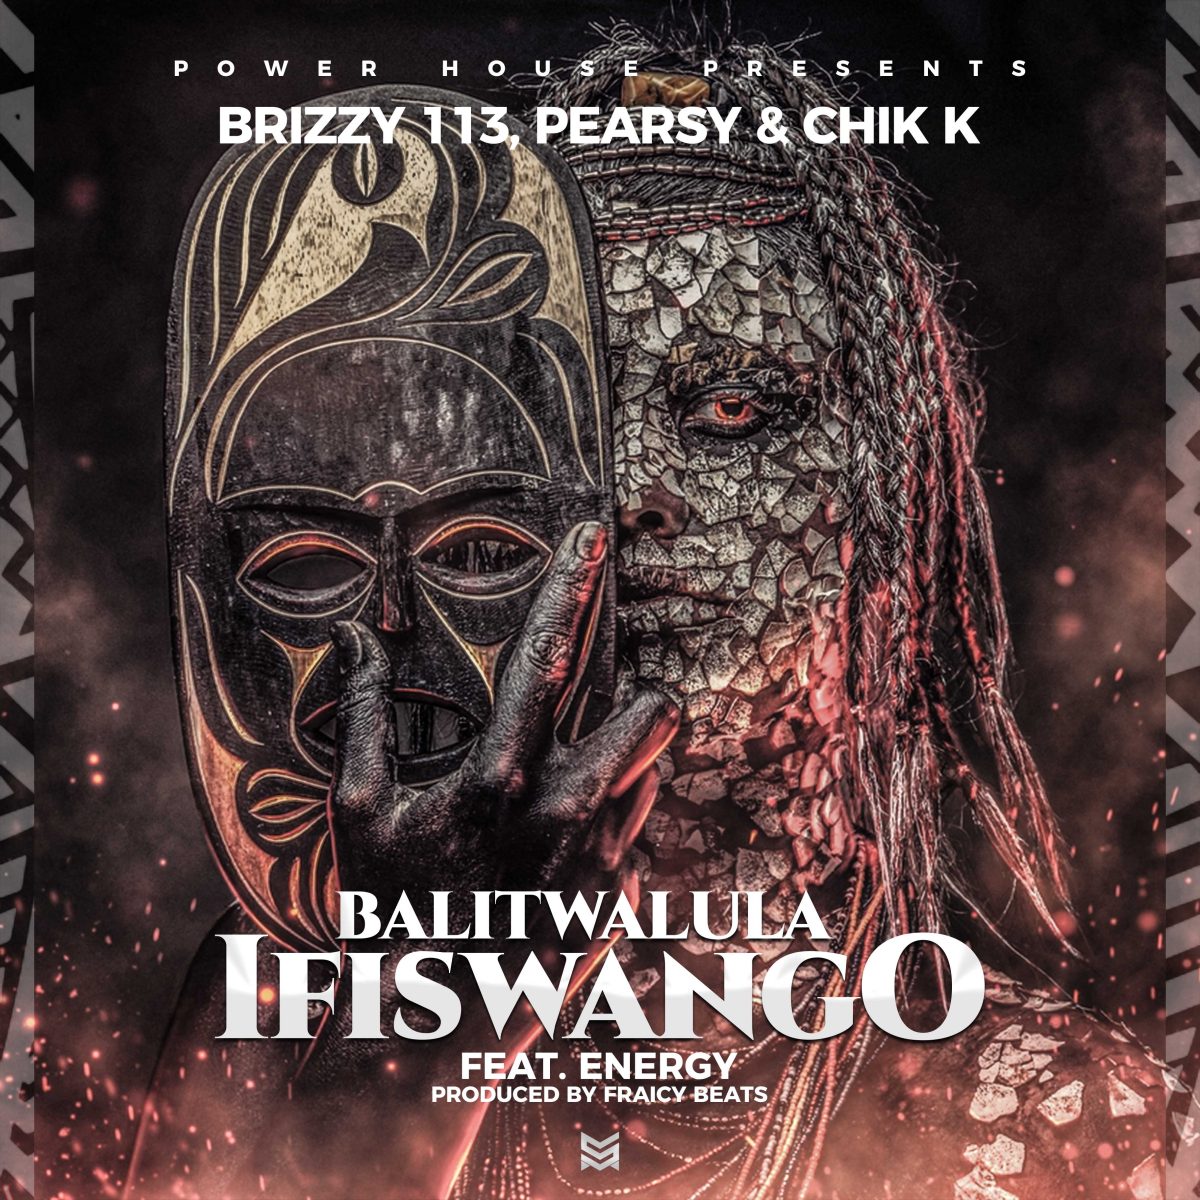 Brizzy 113, Pearsy & Chik K ft. Energy - Balitwalula Ifiswango